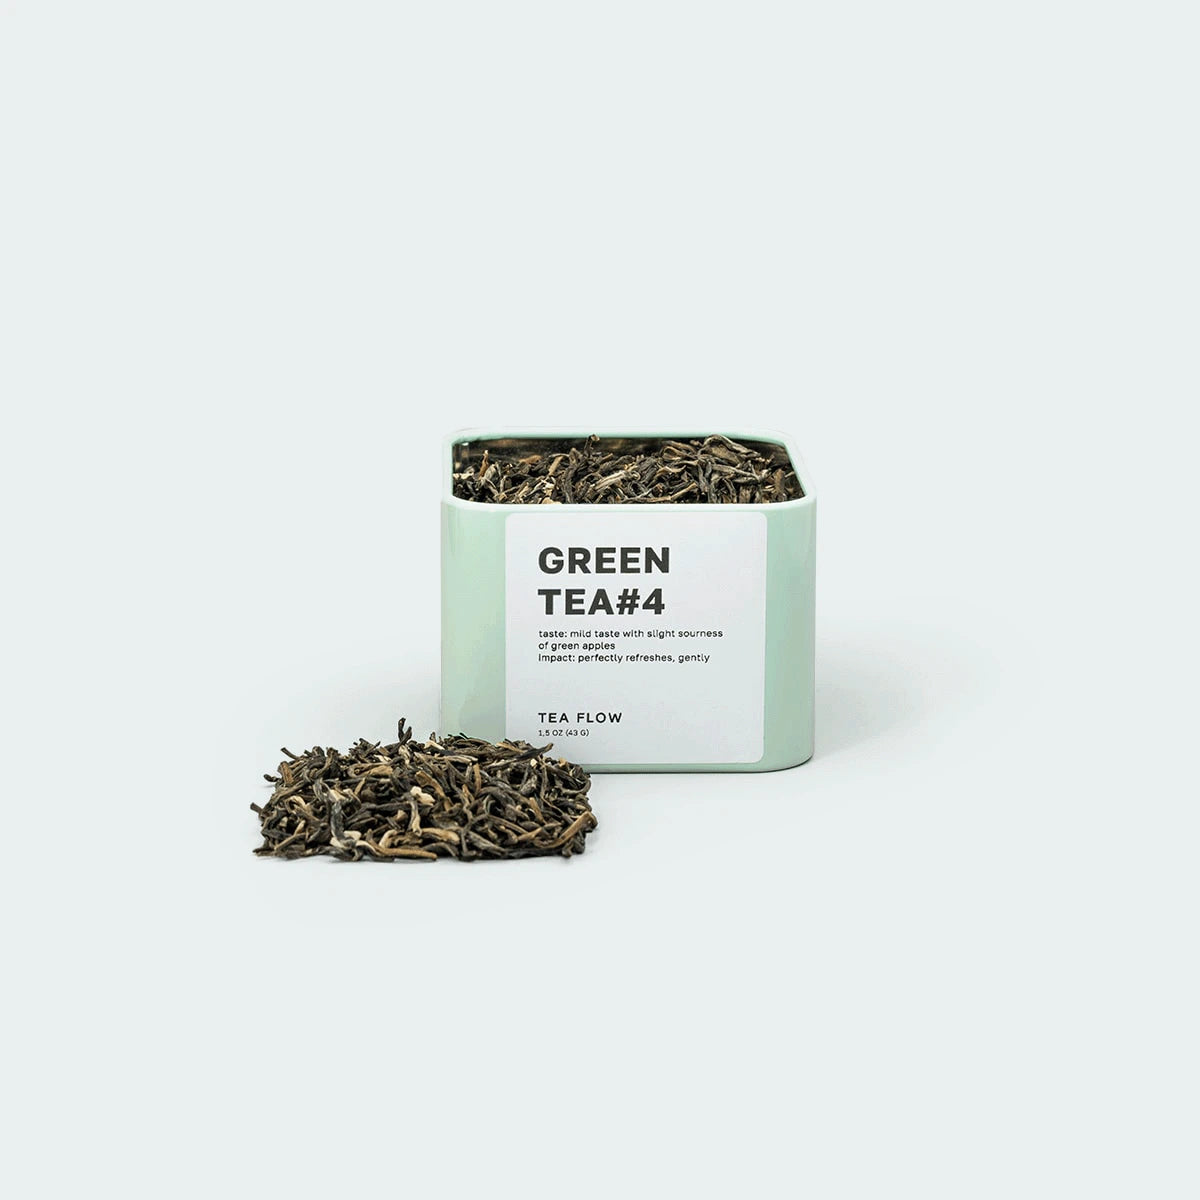 GREEN TEA #4